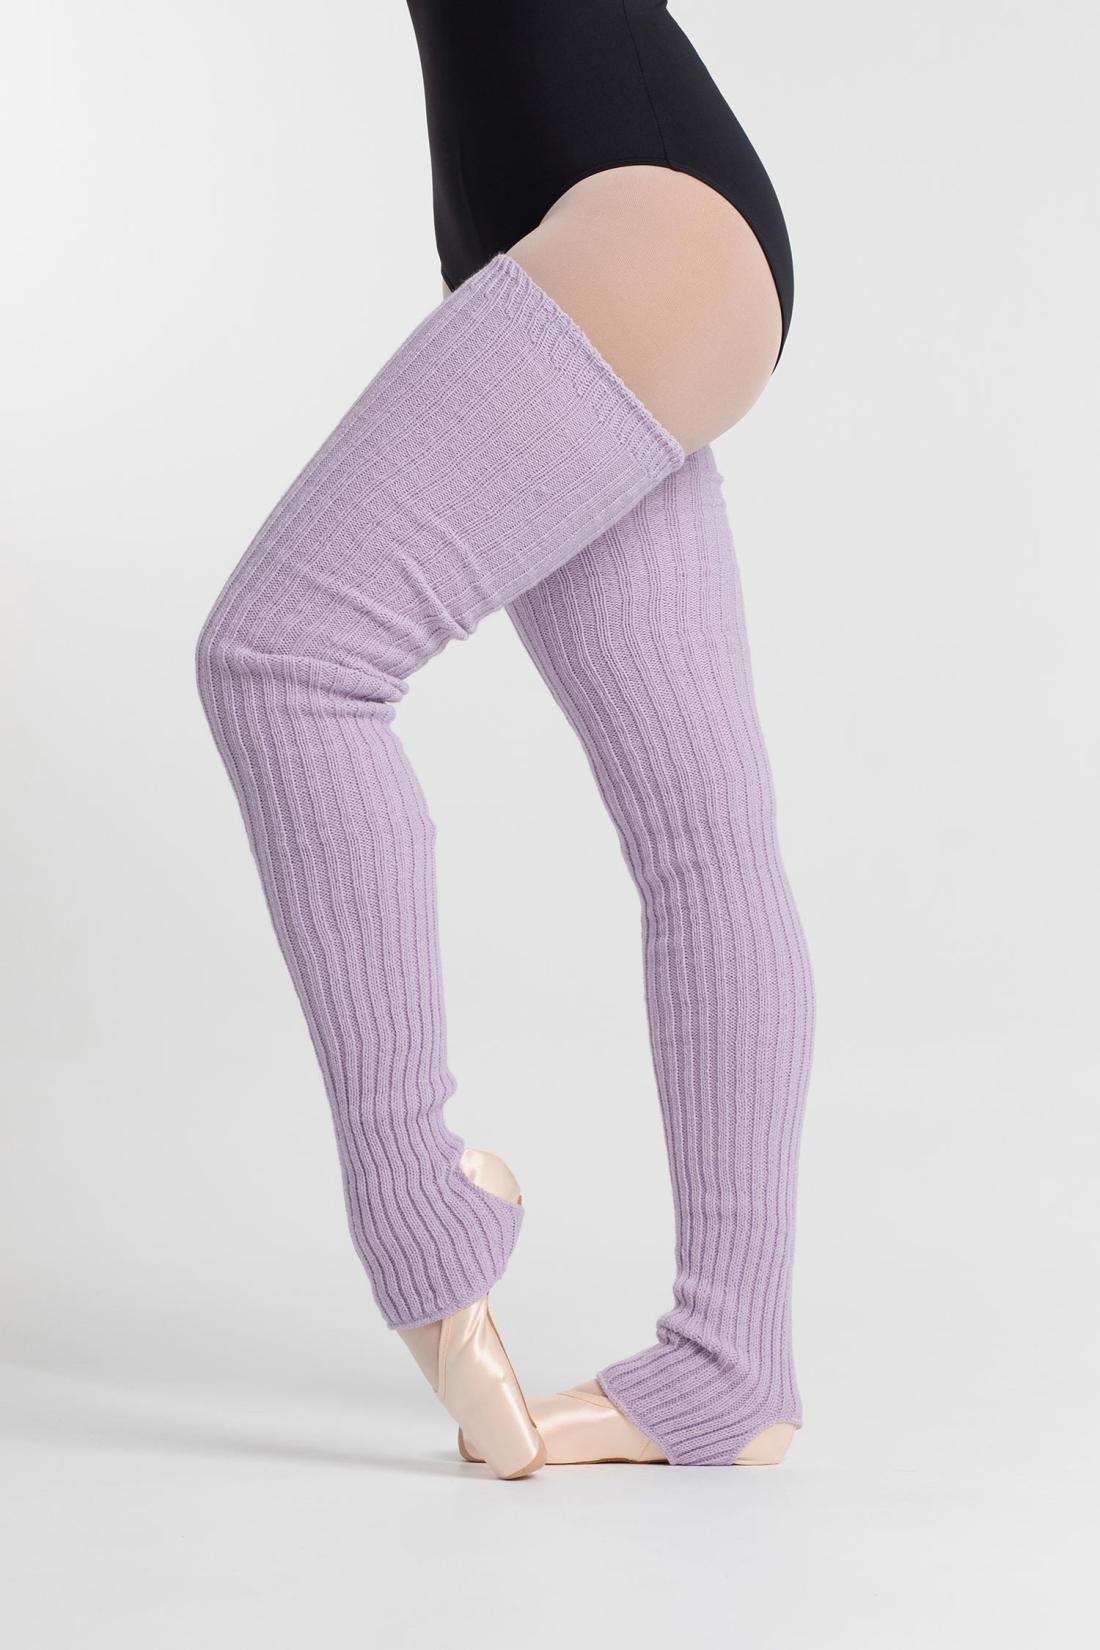 Intermezzo classic Maxical knit stirrup Legwarmers ballet dancewear